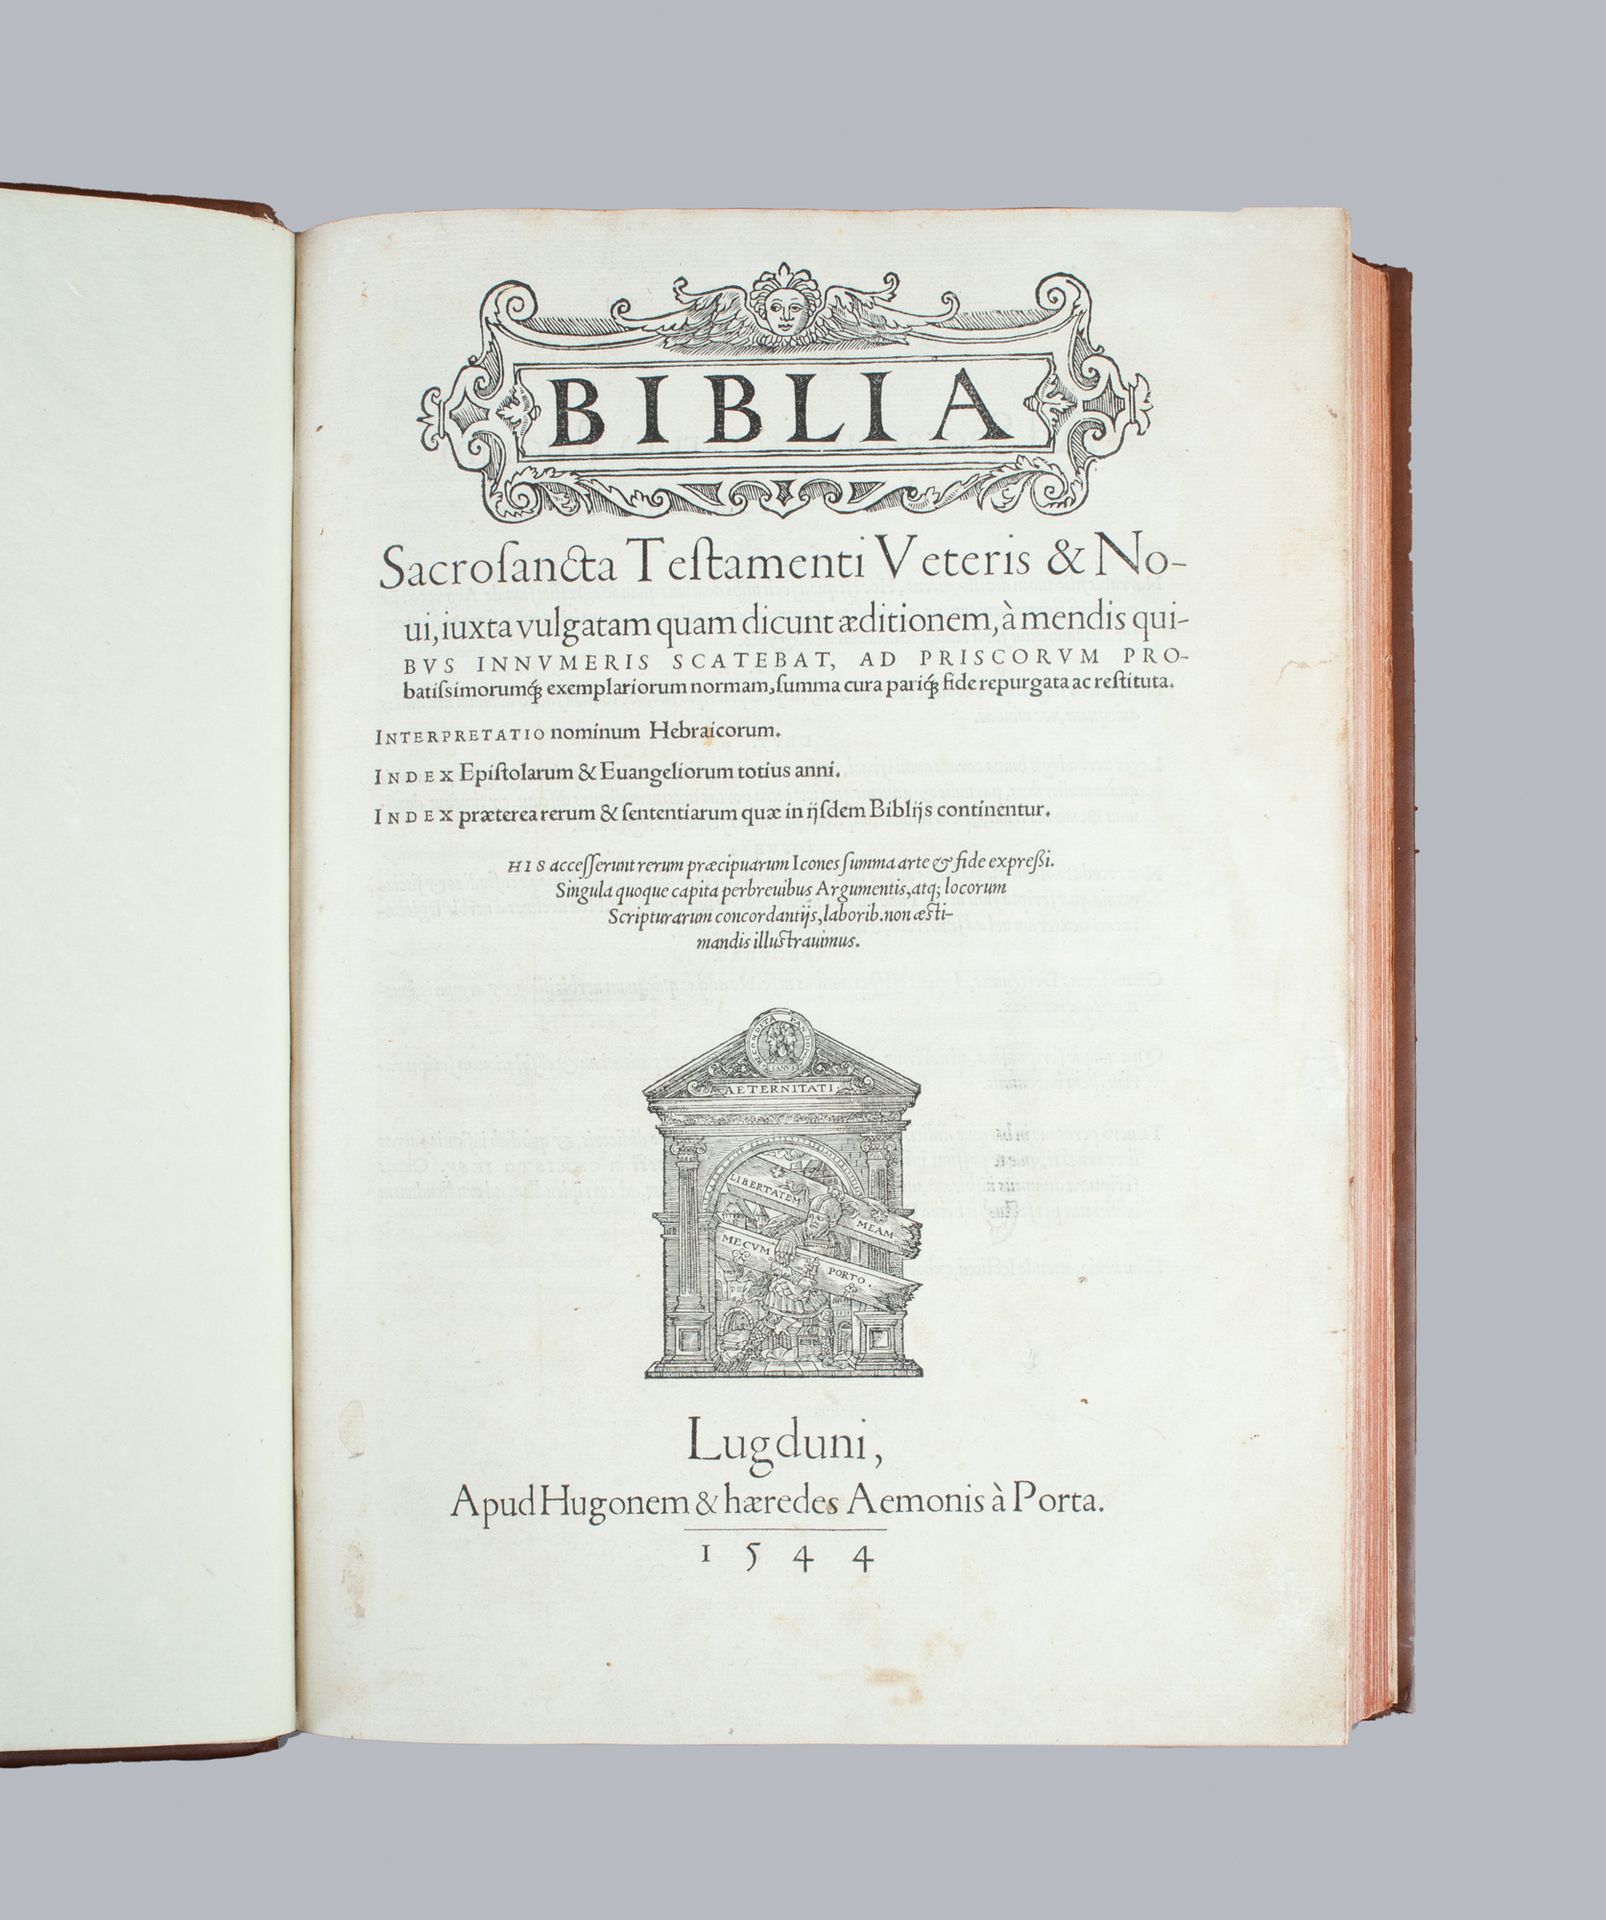 BIBLE. Biblia sacrosancta Testamentis Veteris & Novi. Lyon, [Jean et François Fr&hellip;